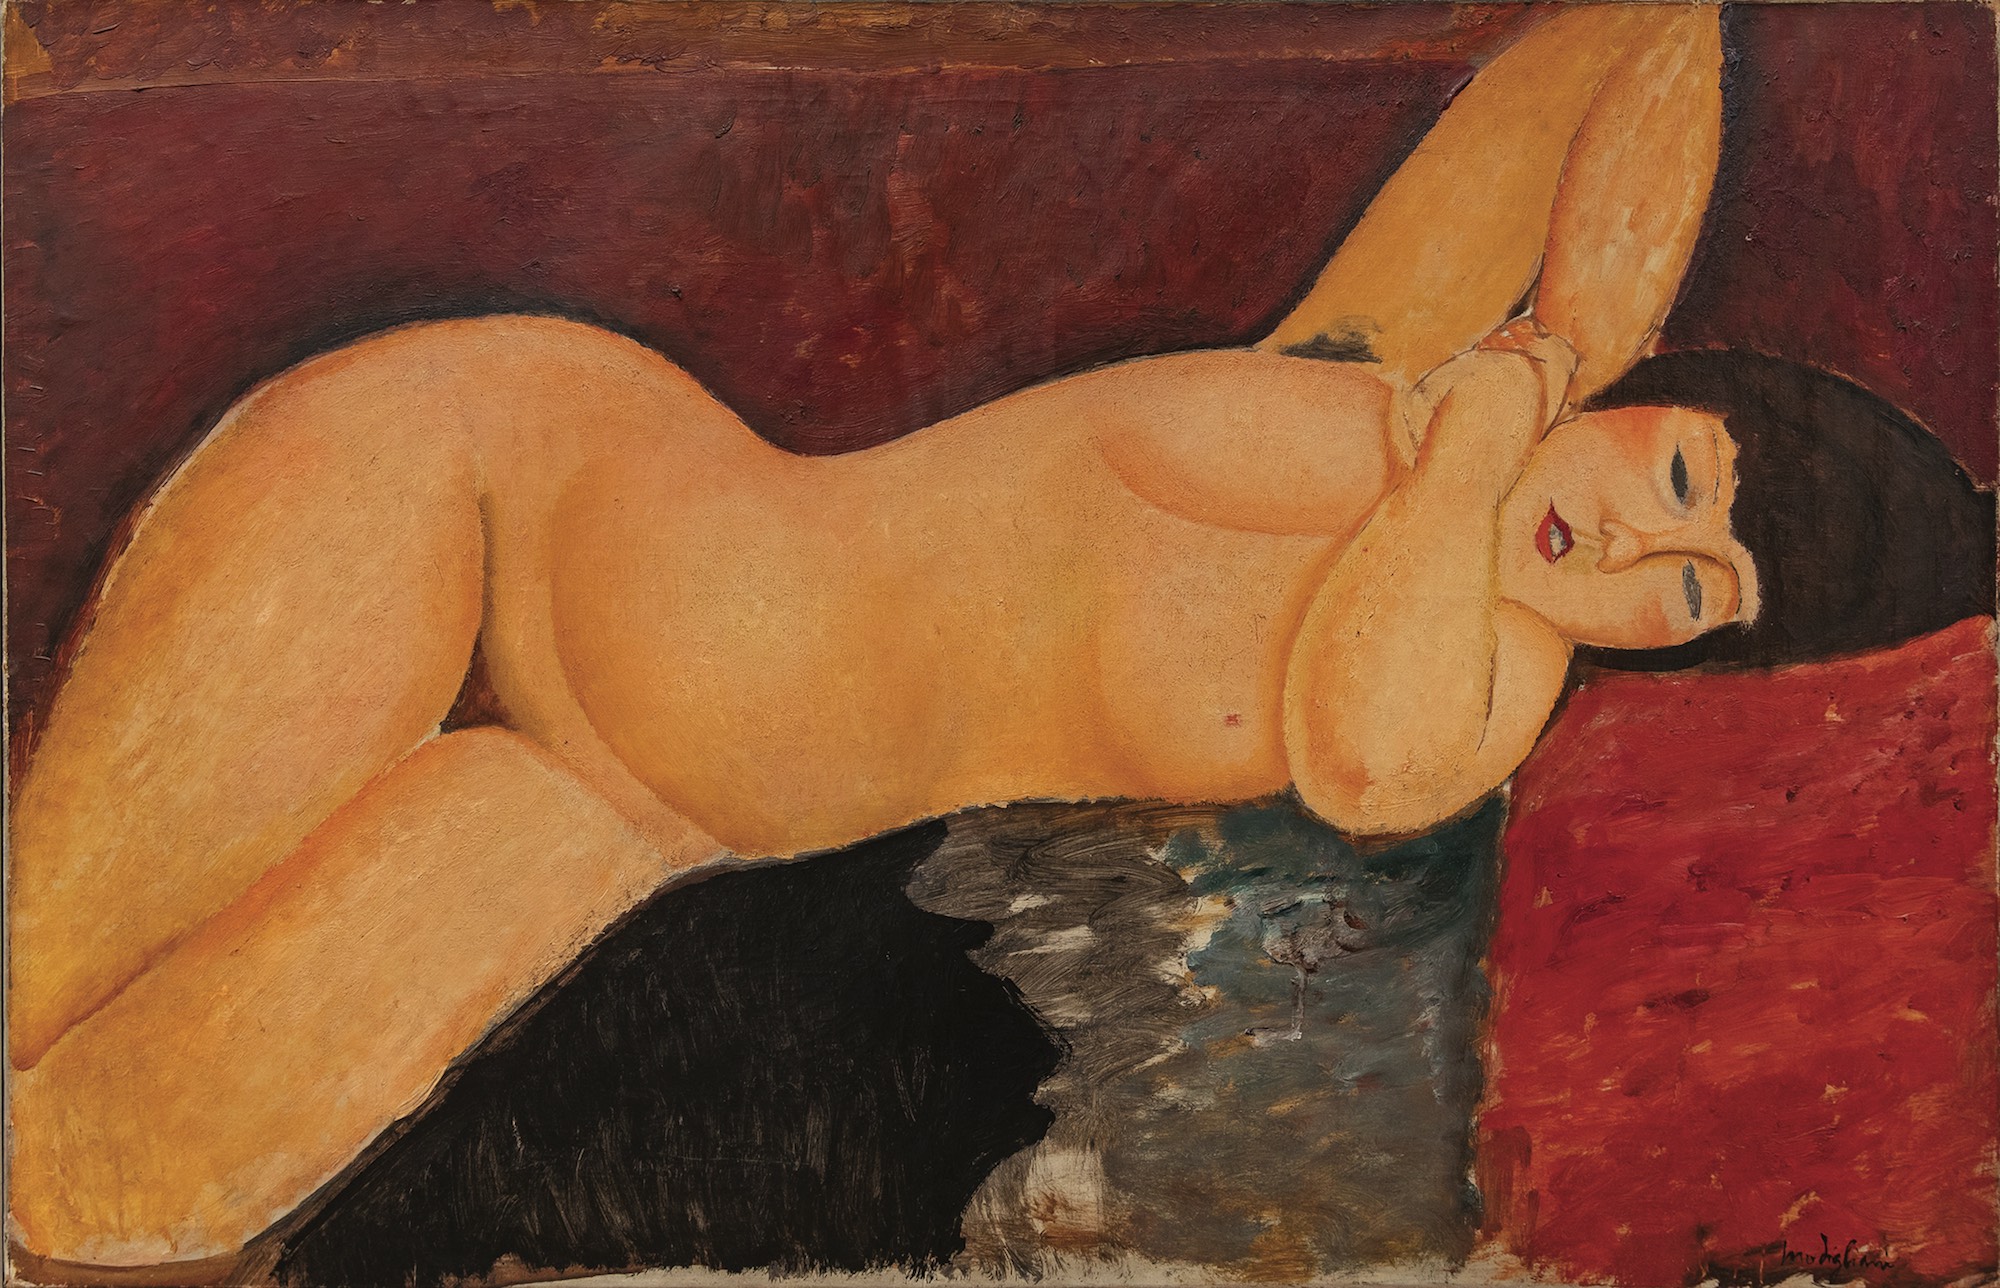 Amedeo Modigliani (1884-1920), Nu couché, 1917-1918. Huile sur toile, 66 x 100 cm. Turin, Pinacoteca Agnelli. Photo service de presse. © Pinacoteca Agnelli, Torino